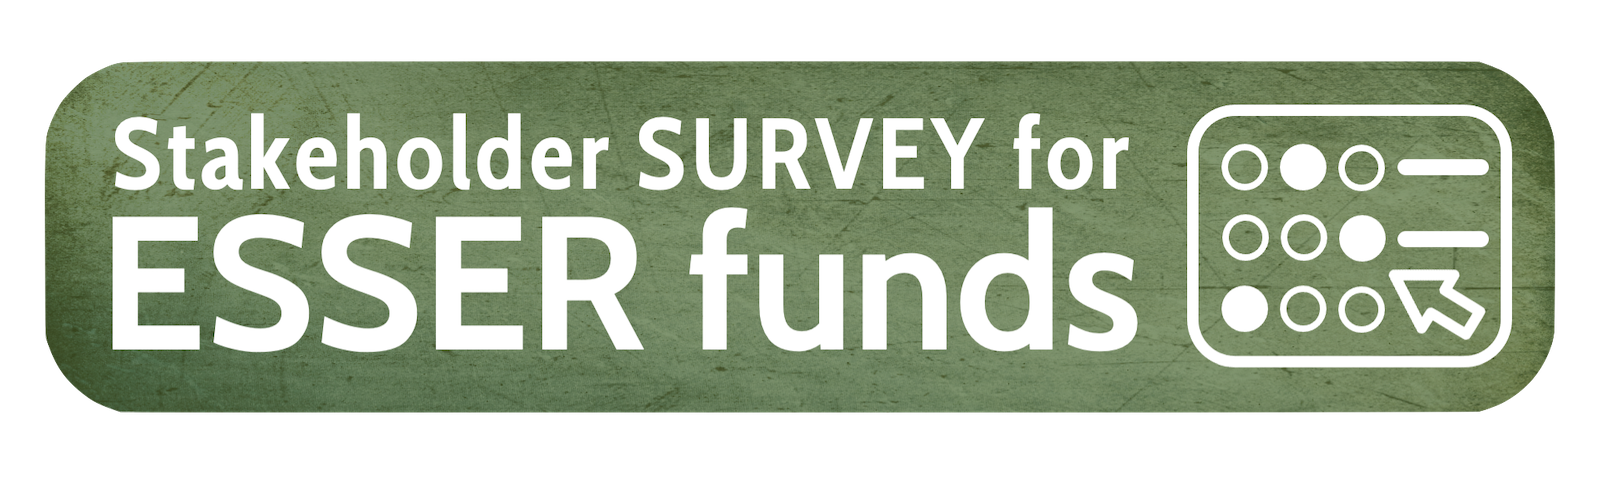 Stakeholder Survey for ESSER Funds